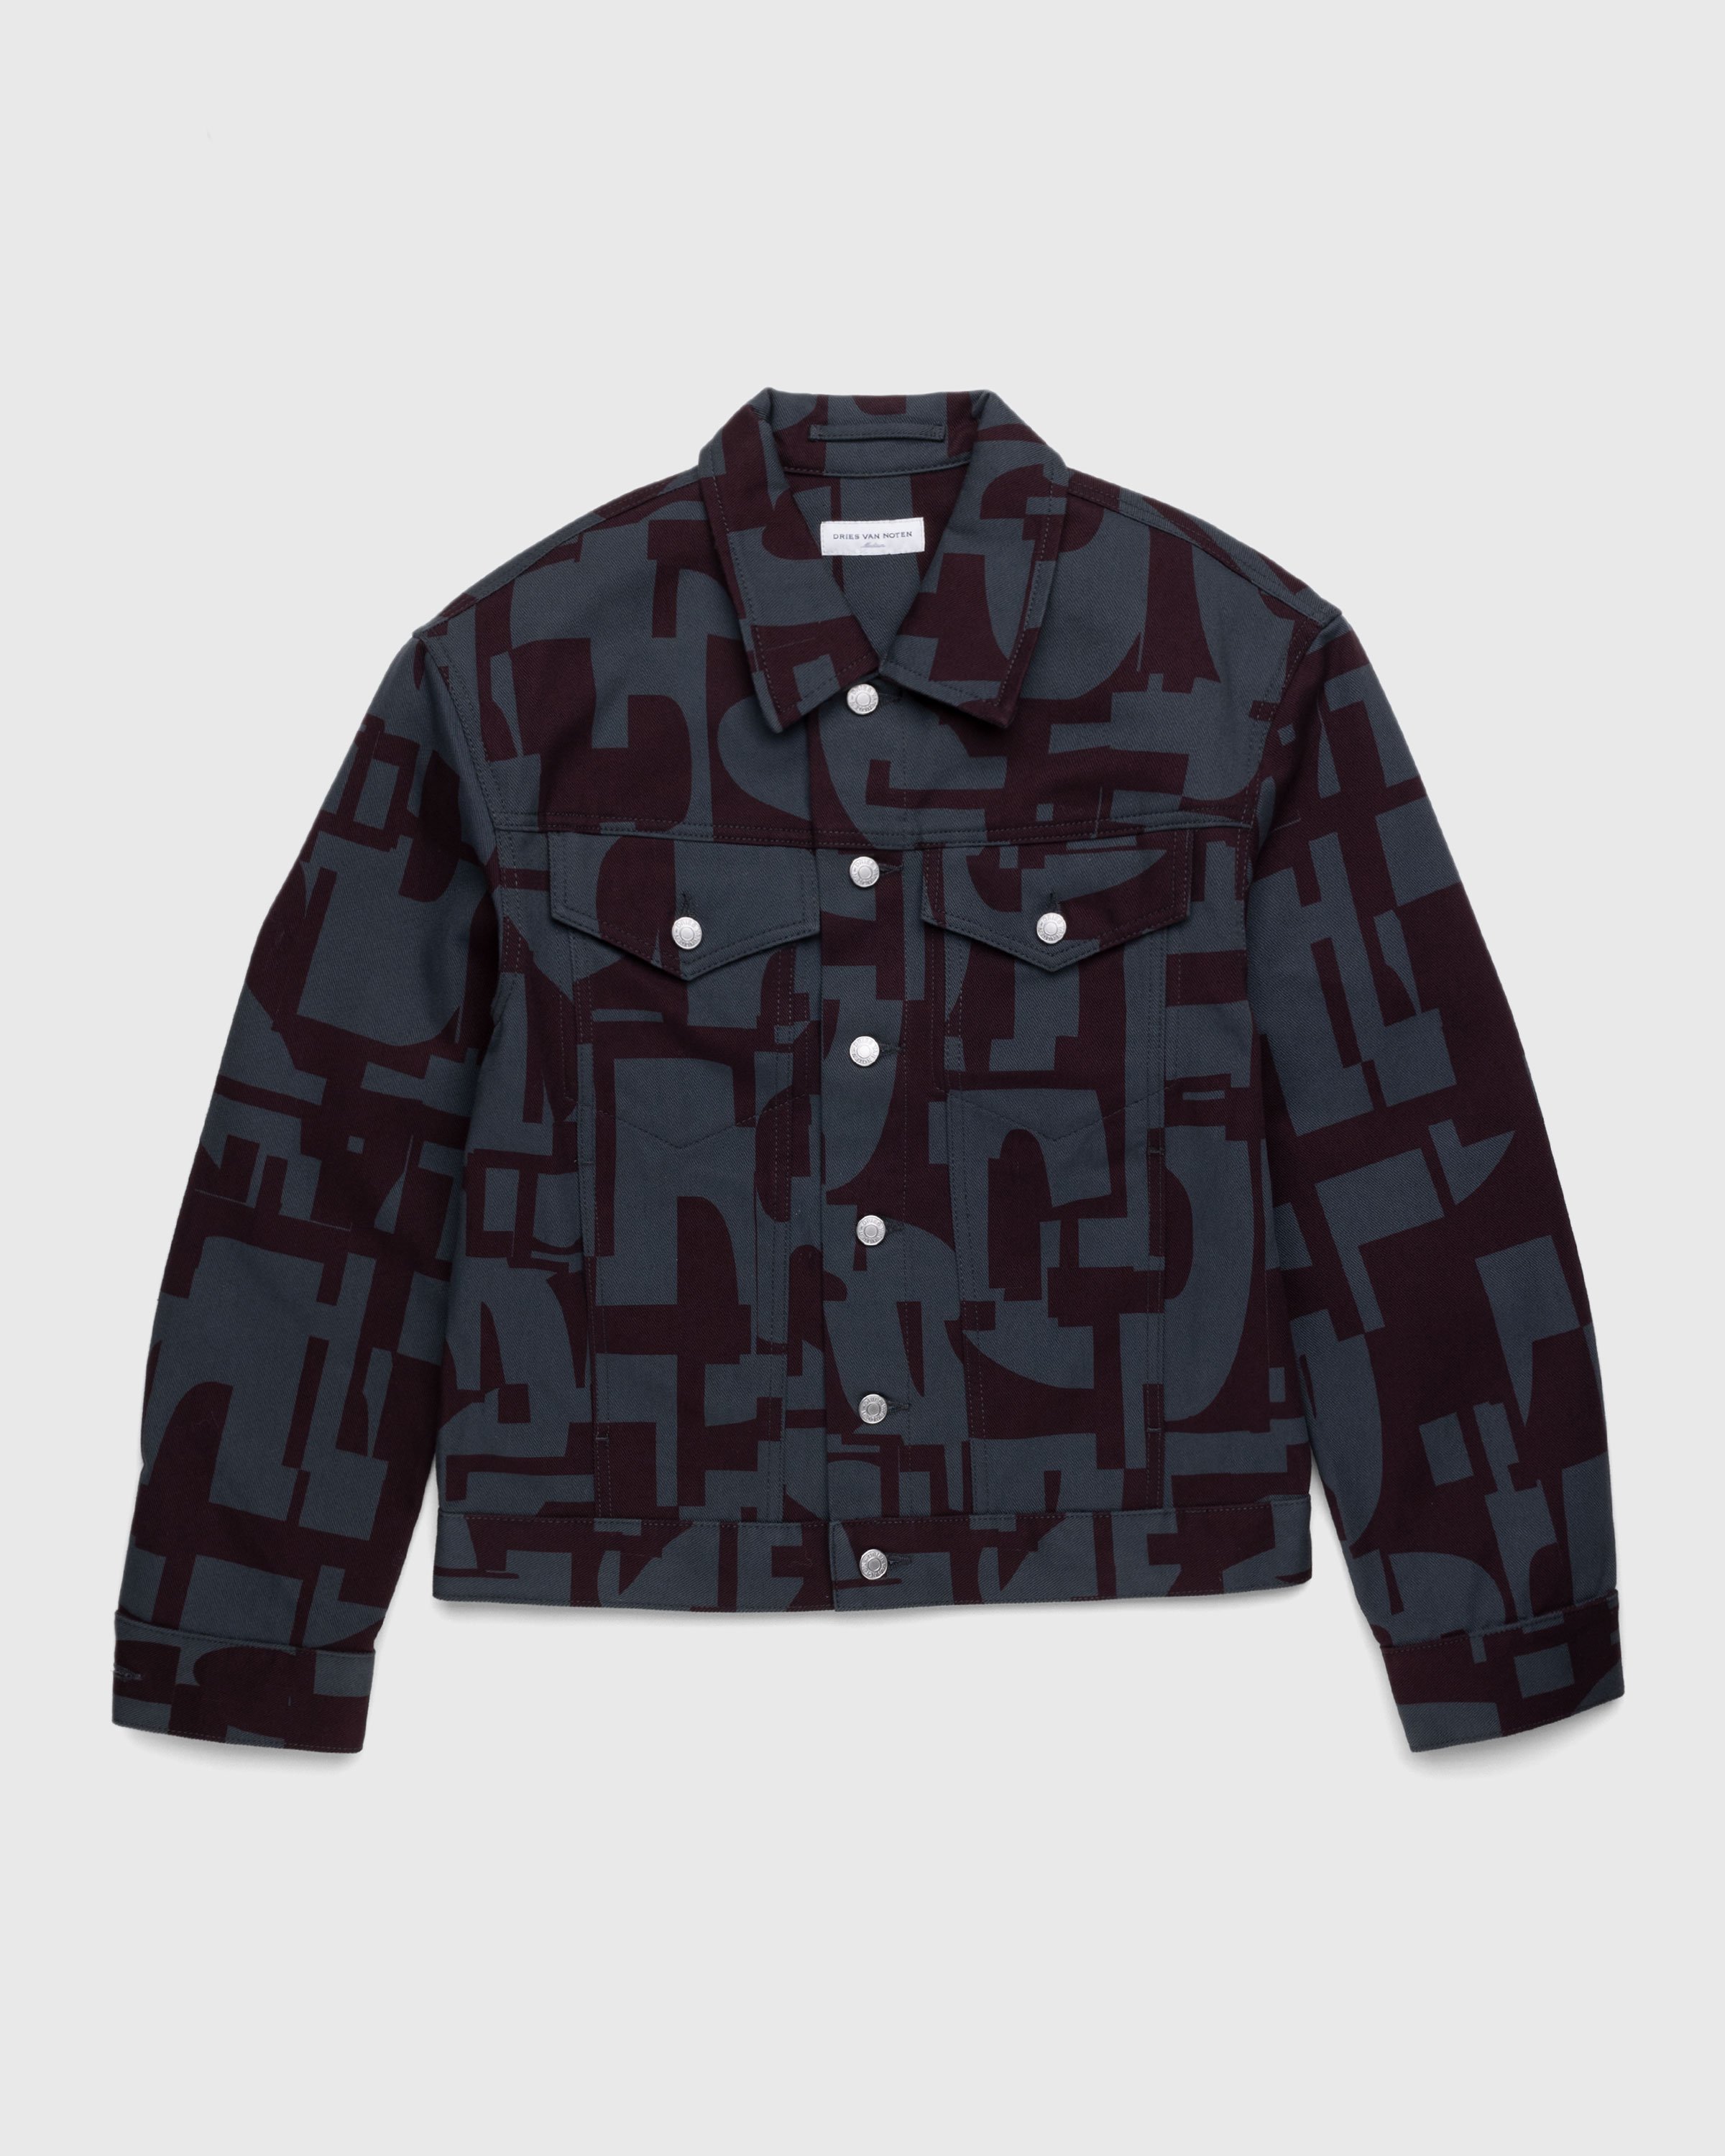 Dries van Noten - Vuskin Denim Jacket Multi - Clothing - Black - Image 1